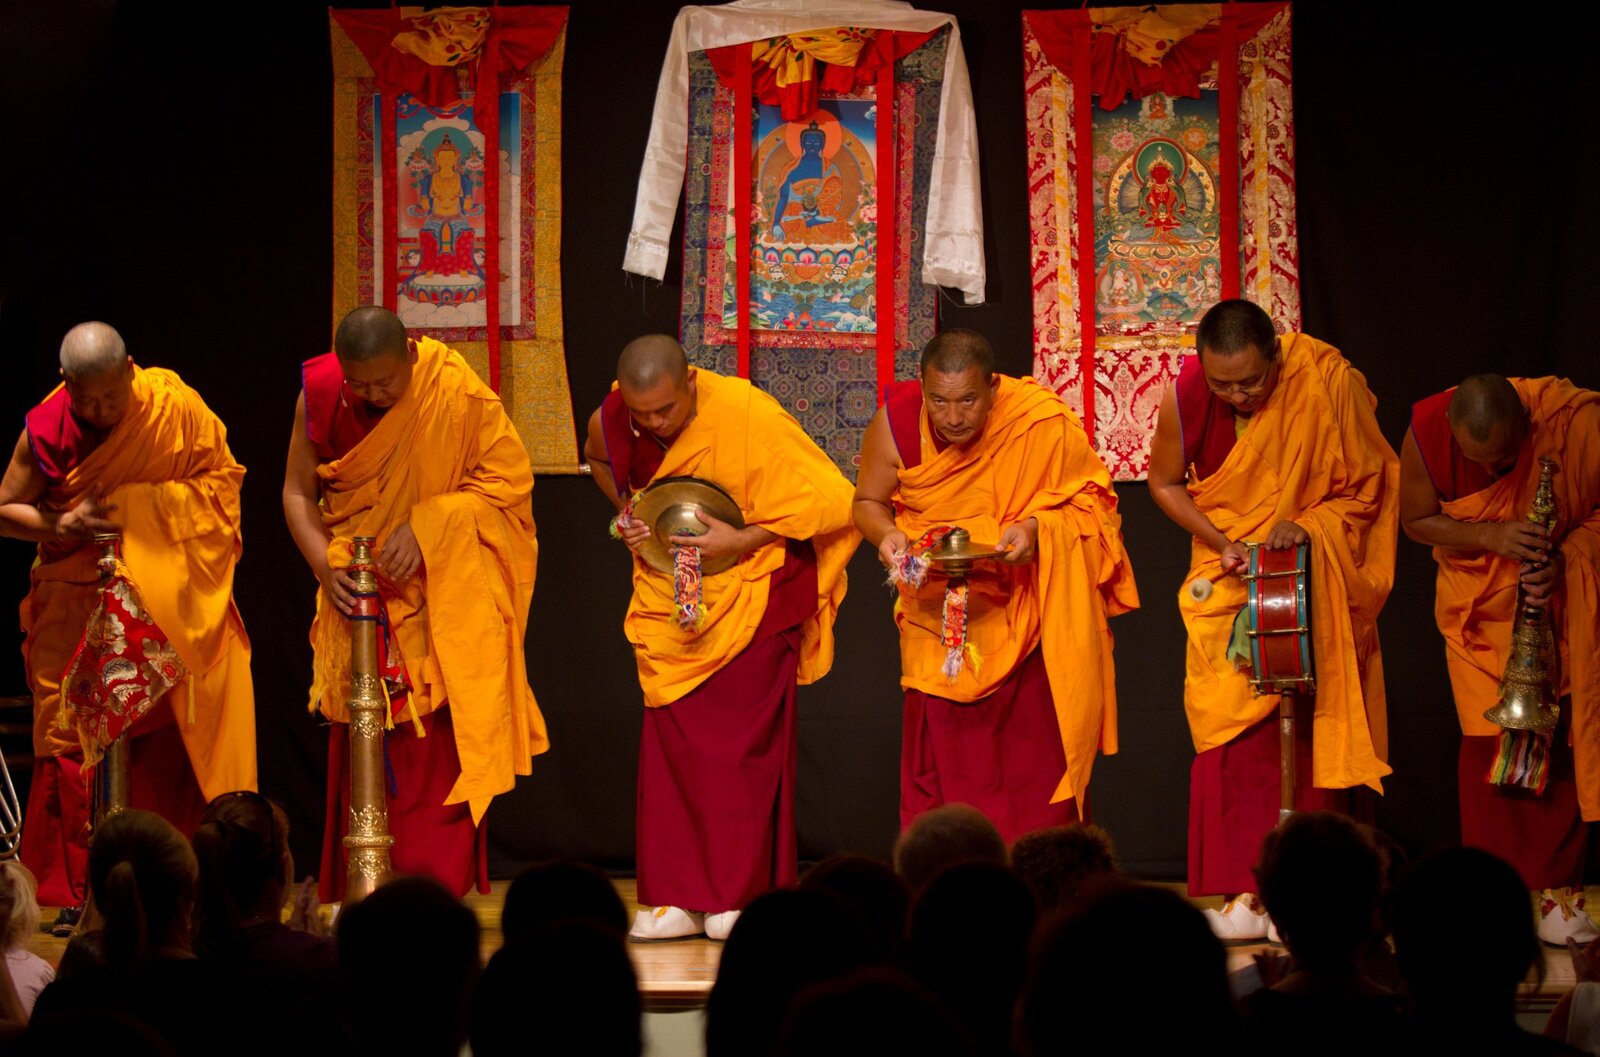 tibetan-monks-bless-compassion-center-reopening-the-sopris-sun-soprissun-com-soprissun-com.jpg